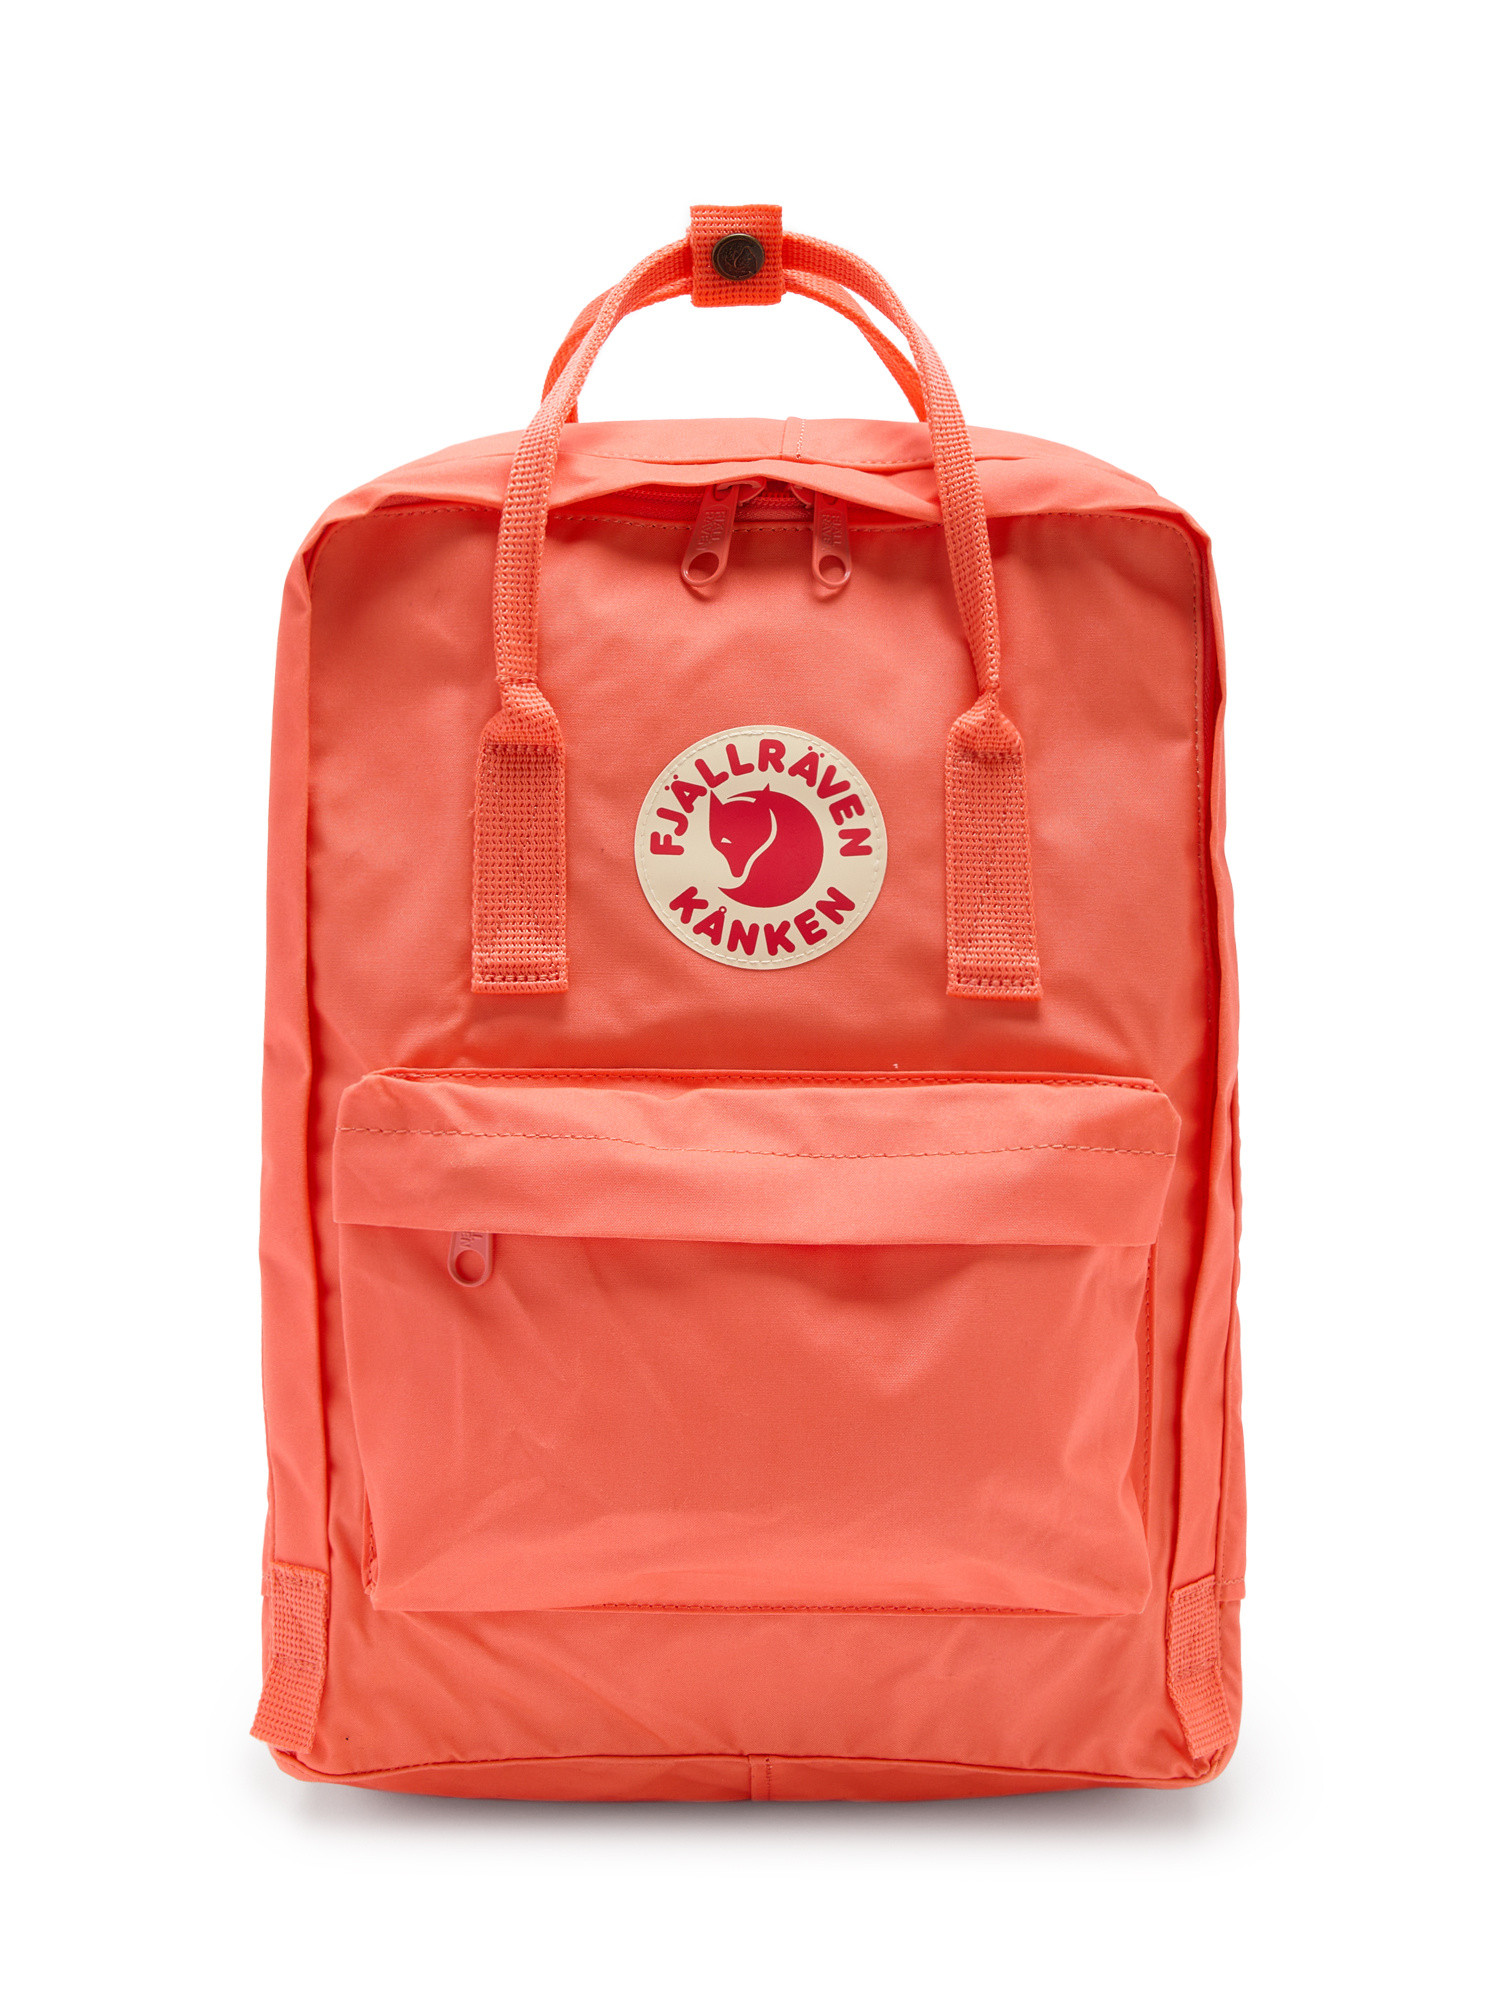 Fjallraven - Classic Kånken backpack in durable Vinylon fabric, Light Orange, large image number 0